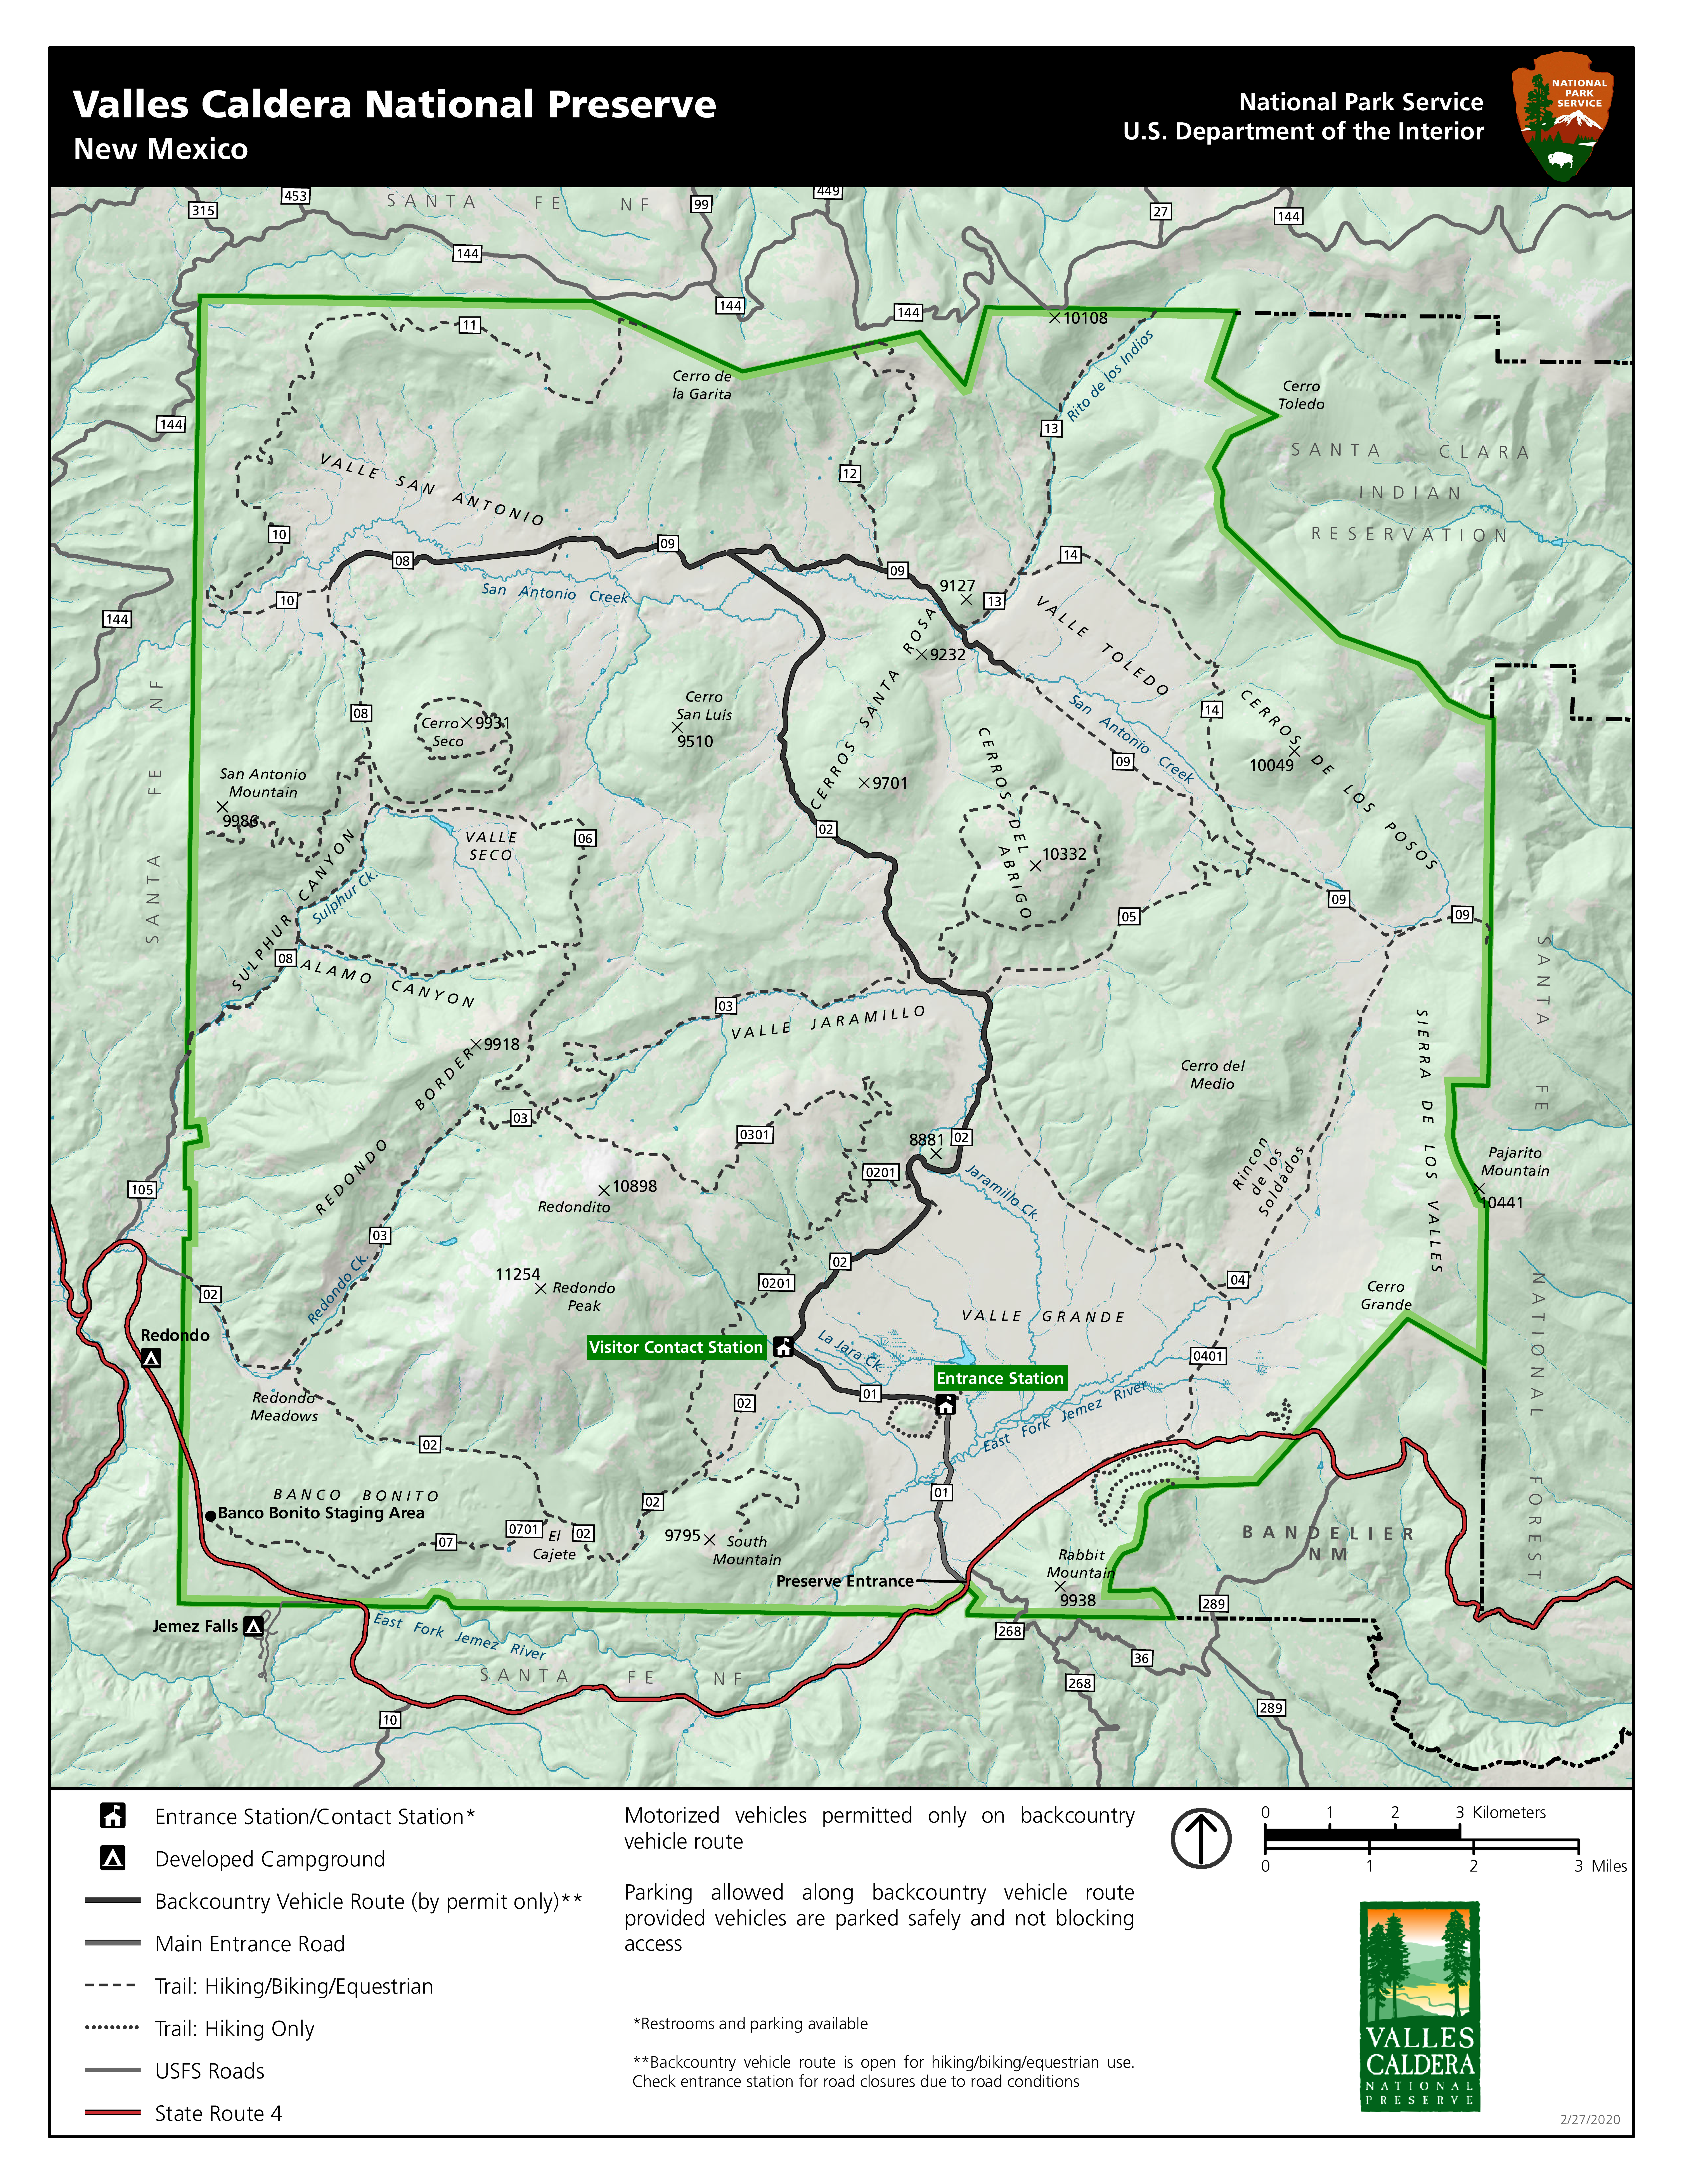 Road map for Valles Caldera National Preserve